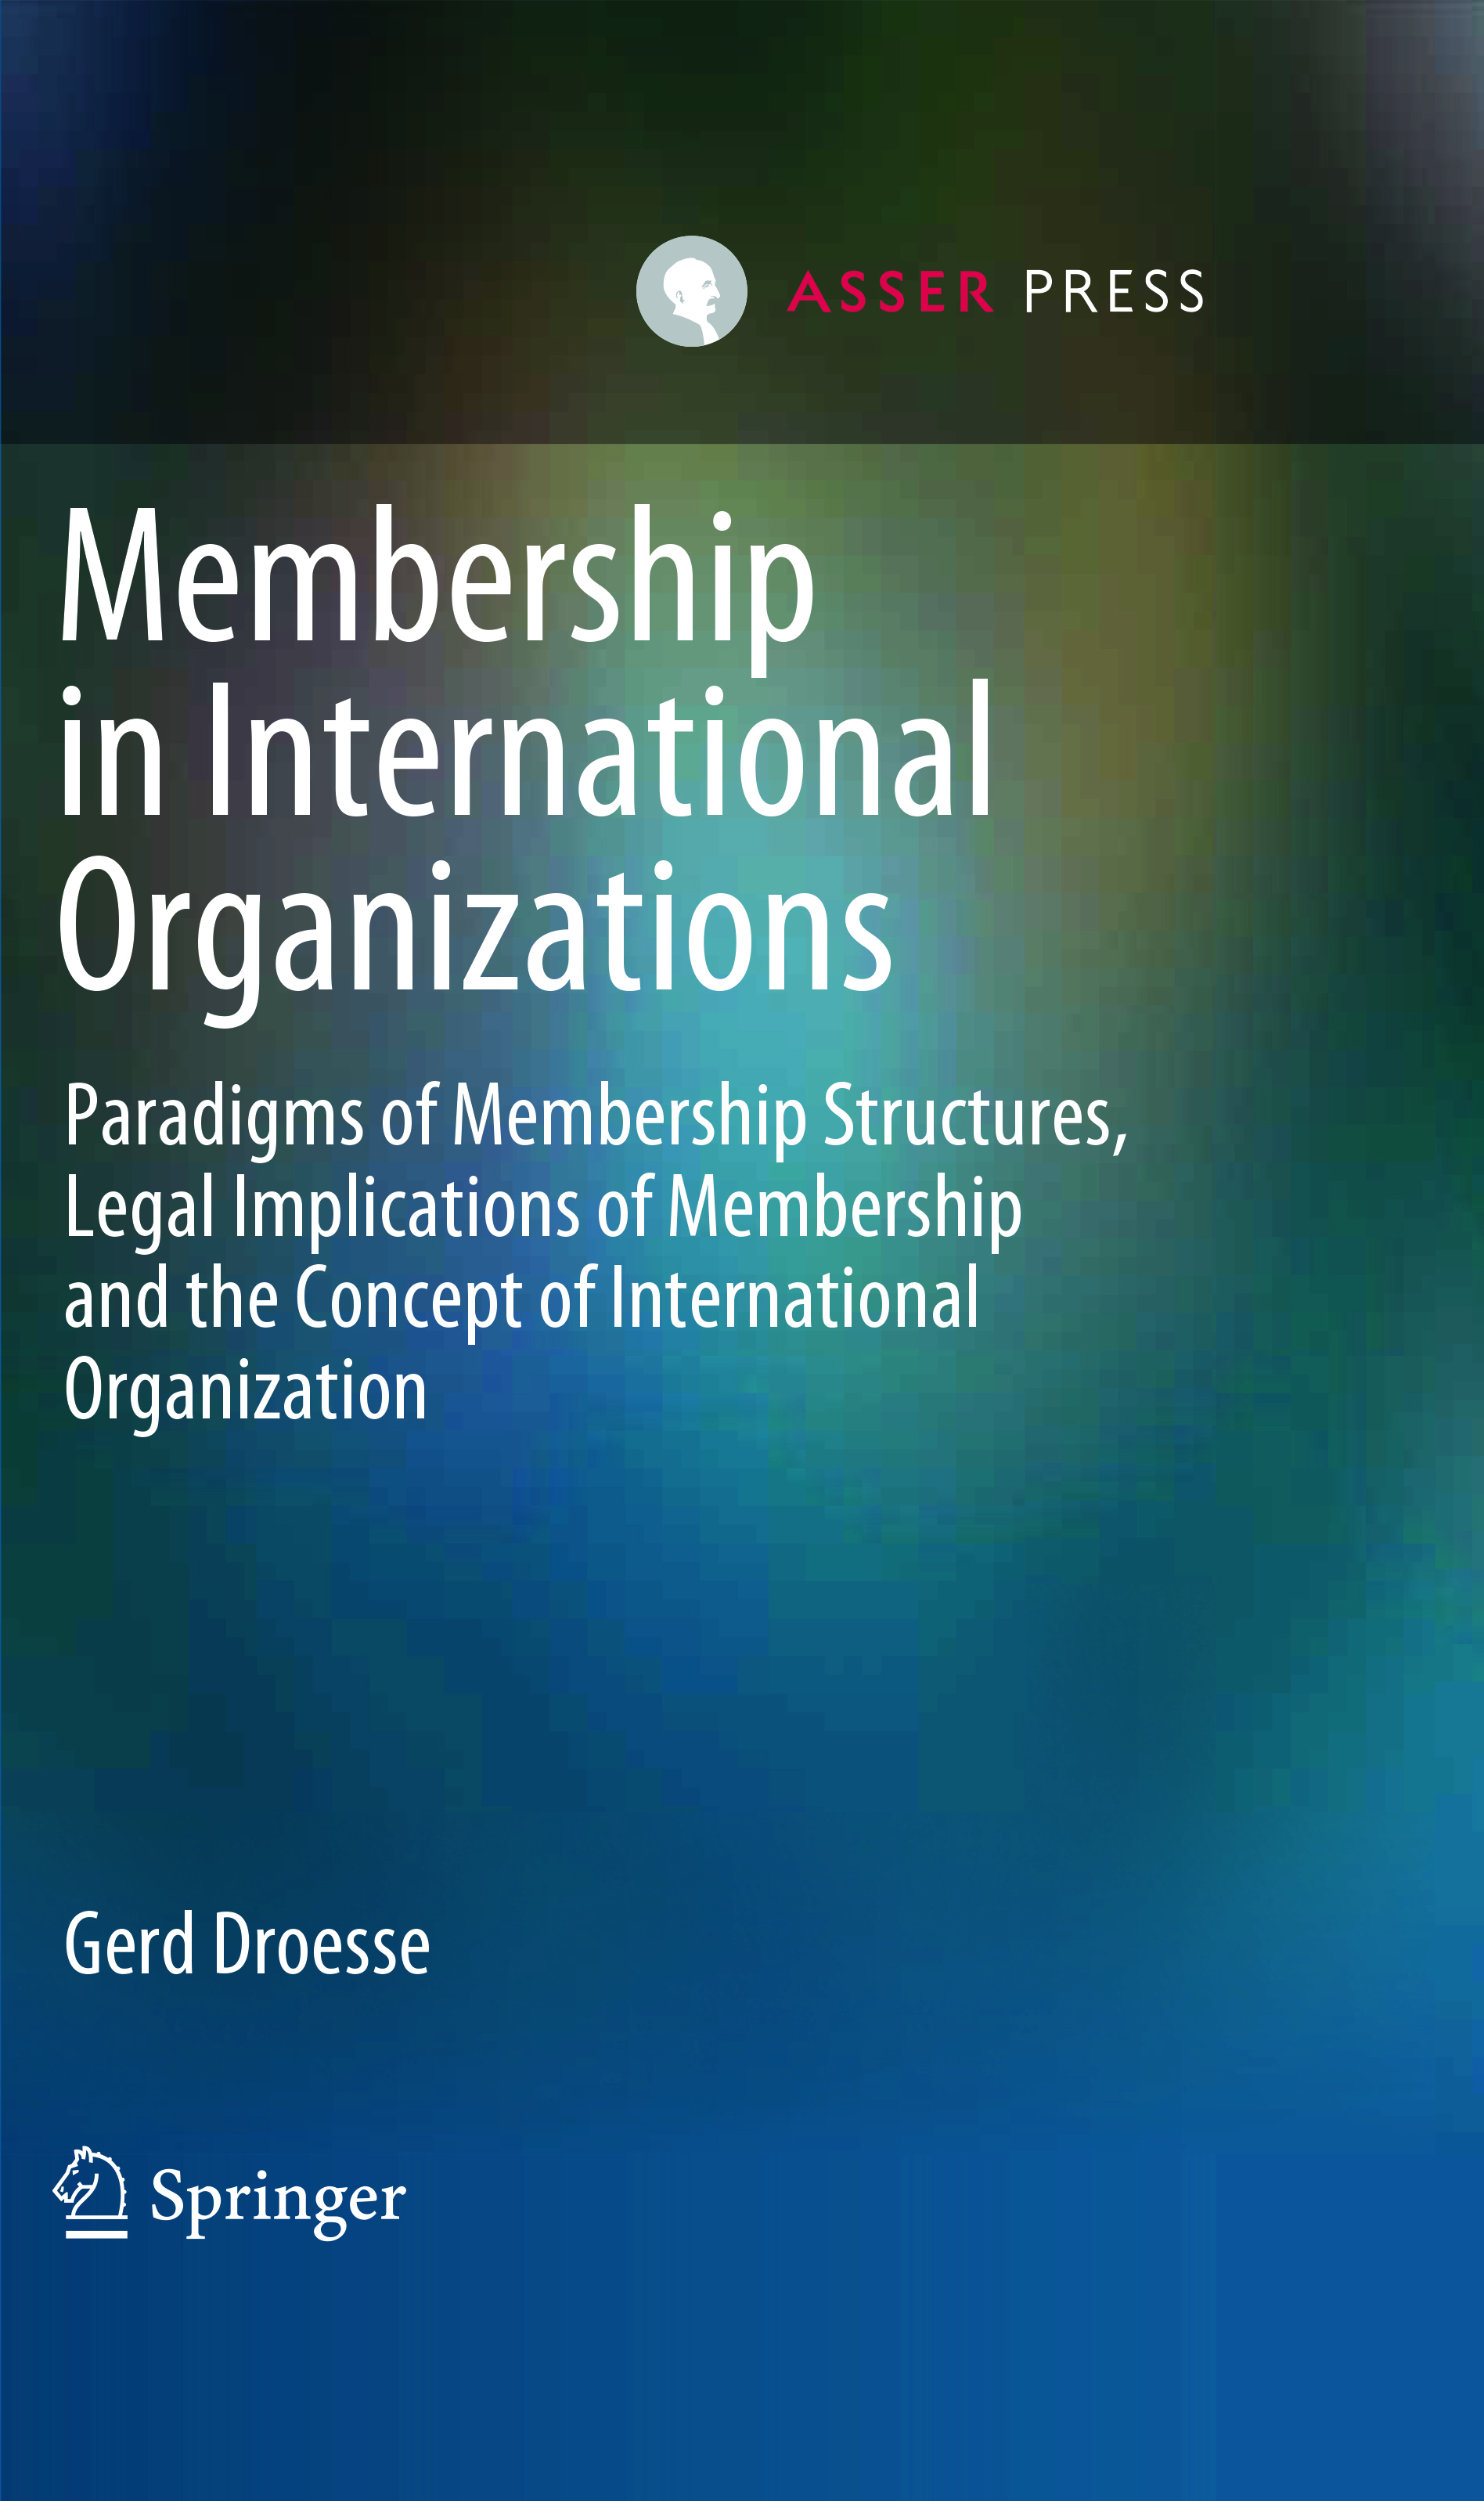 Membership in International Organizations - Paradigms of Membership Structures, Legal Implications of Membership and the Concept of International Organization